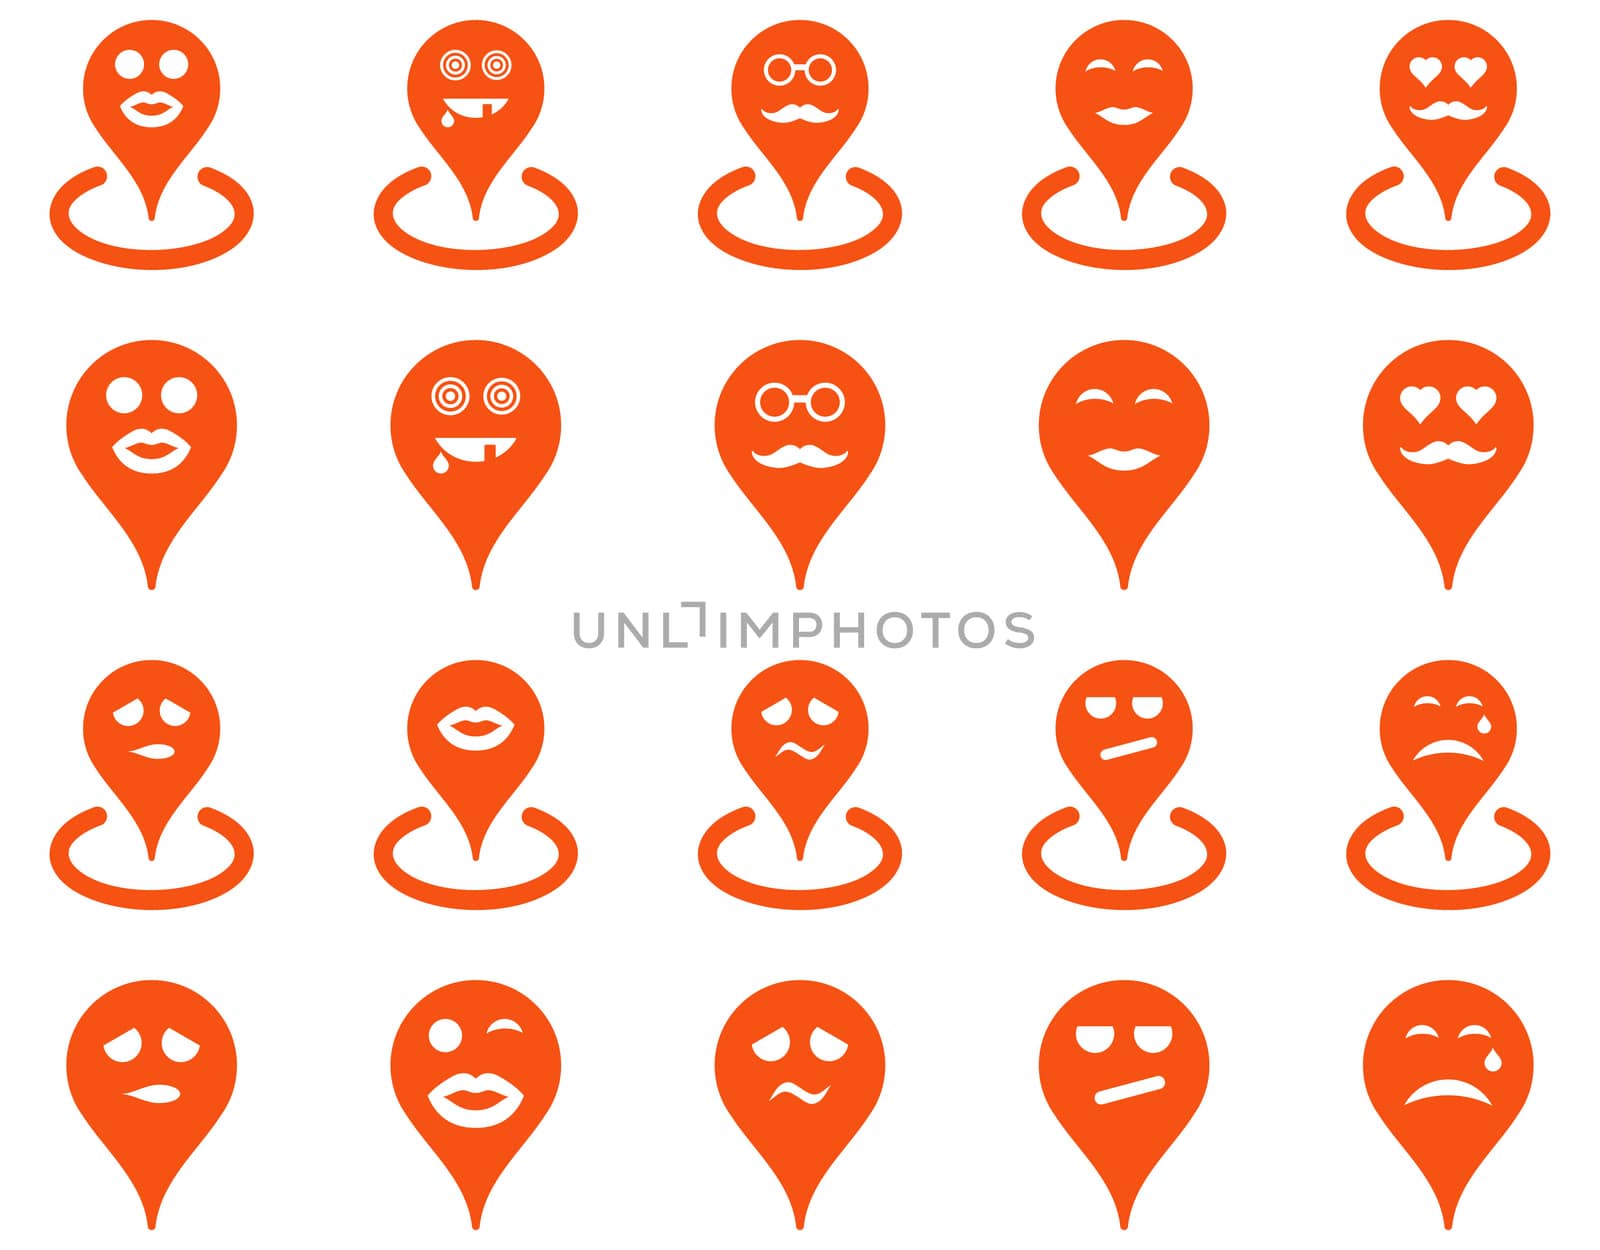 Smiled location icons. Glyph set style is flat images, orange symbols, isolated on a white background.